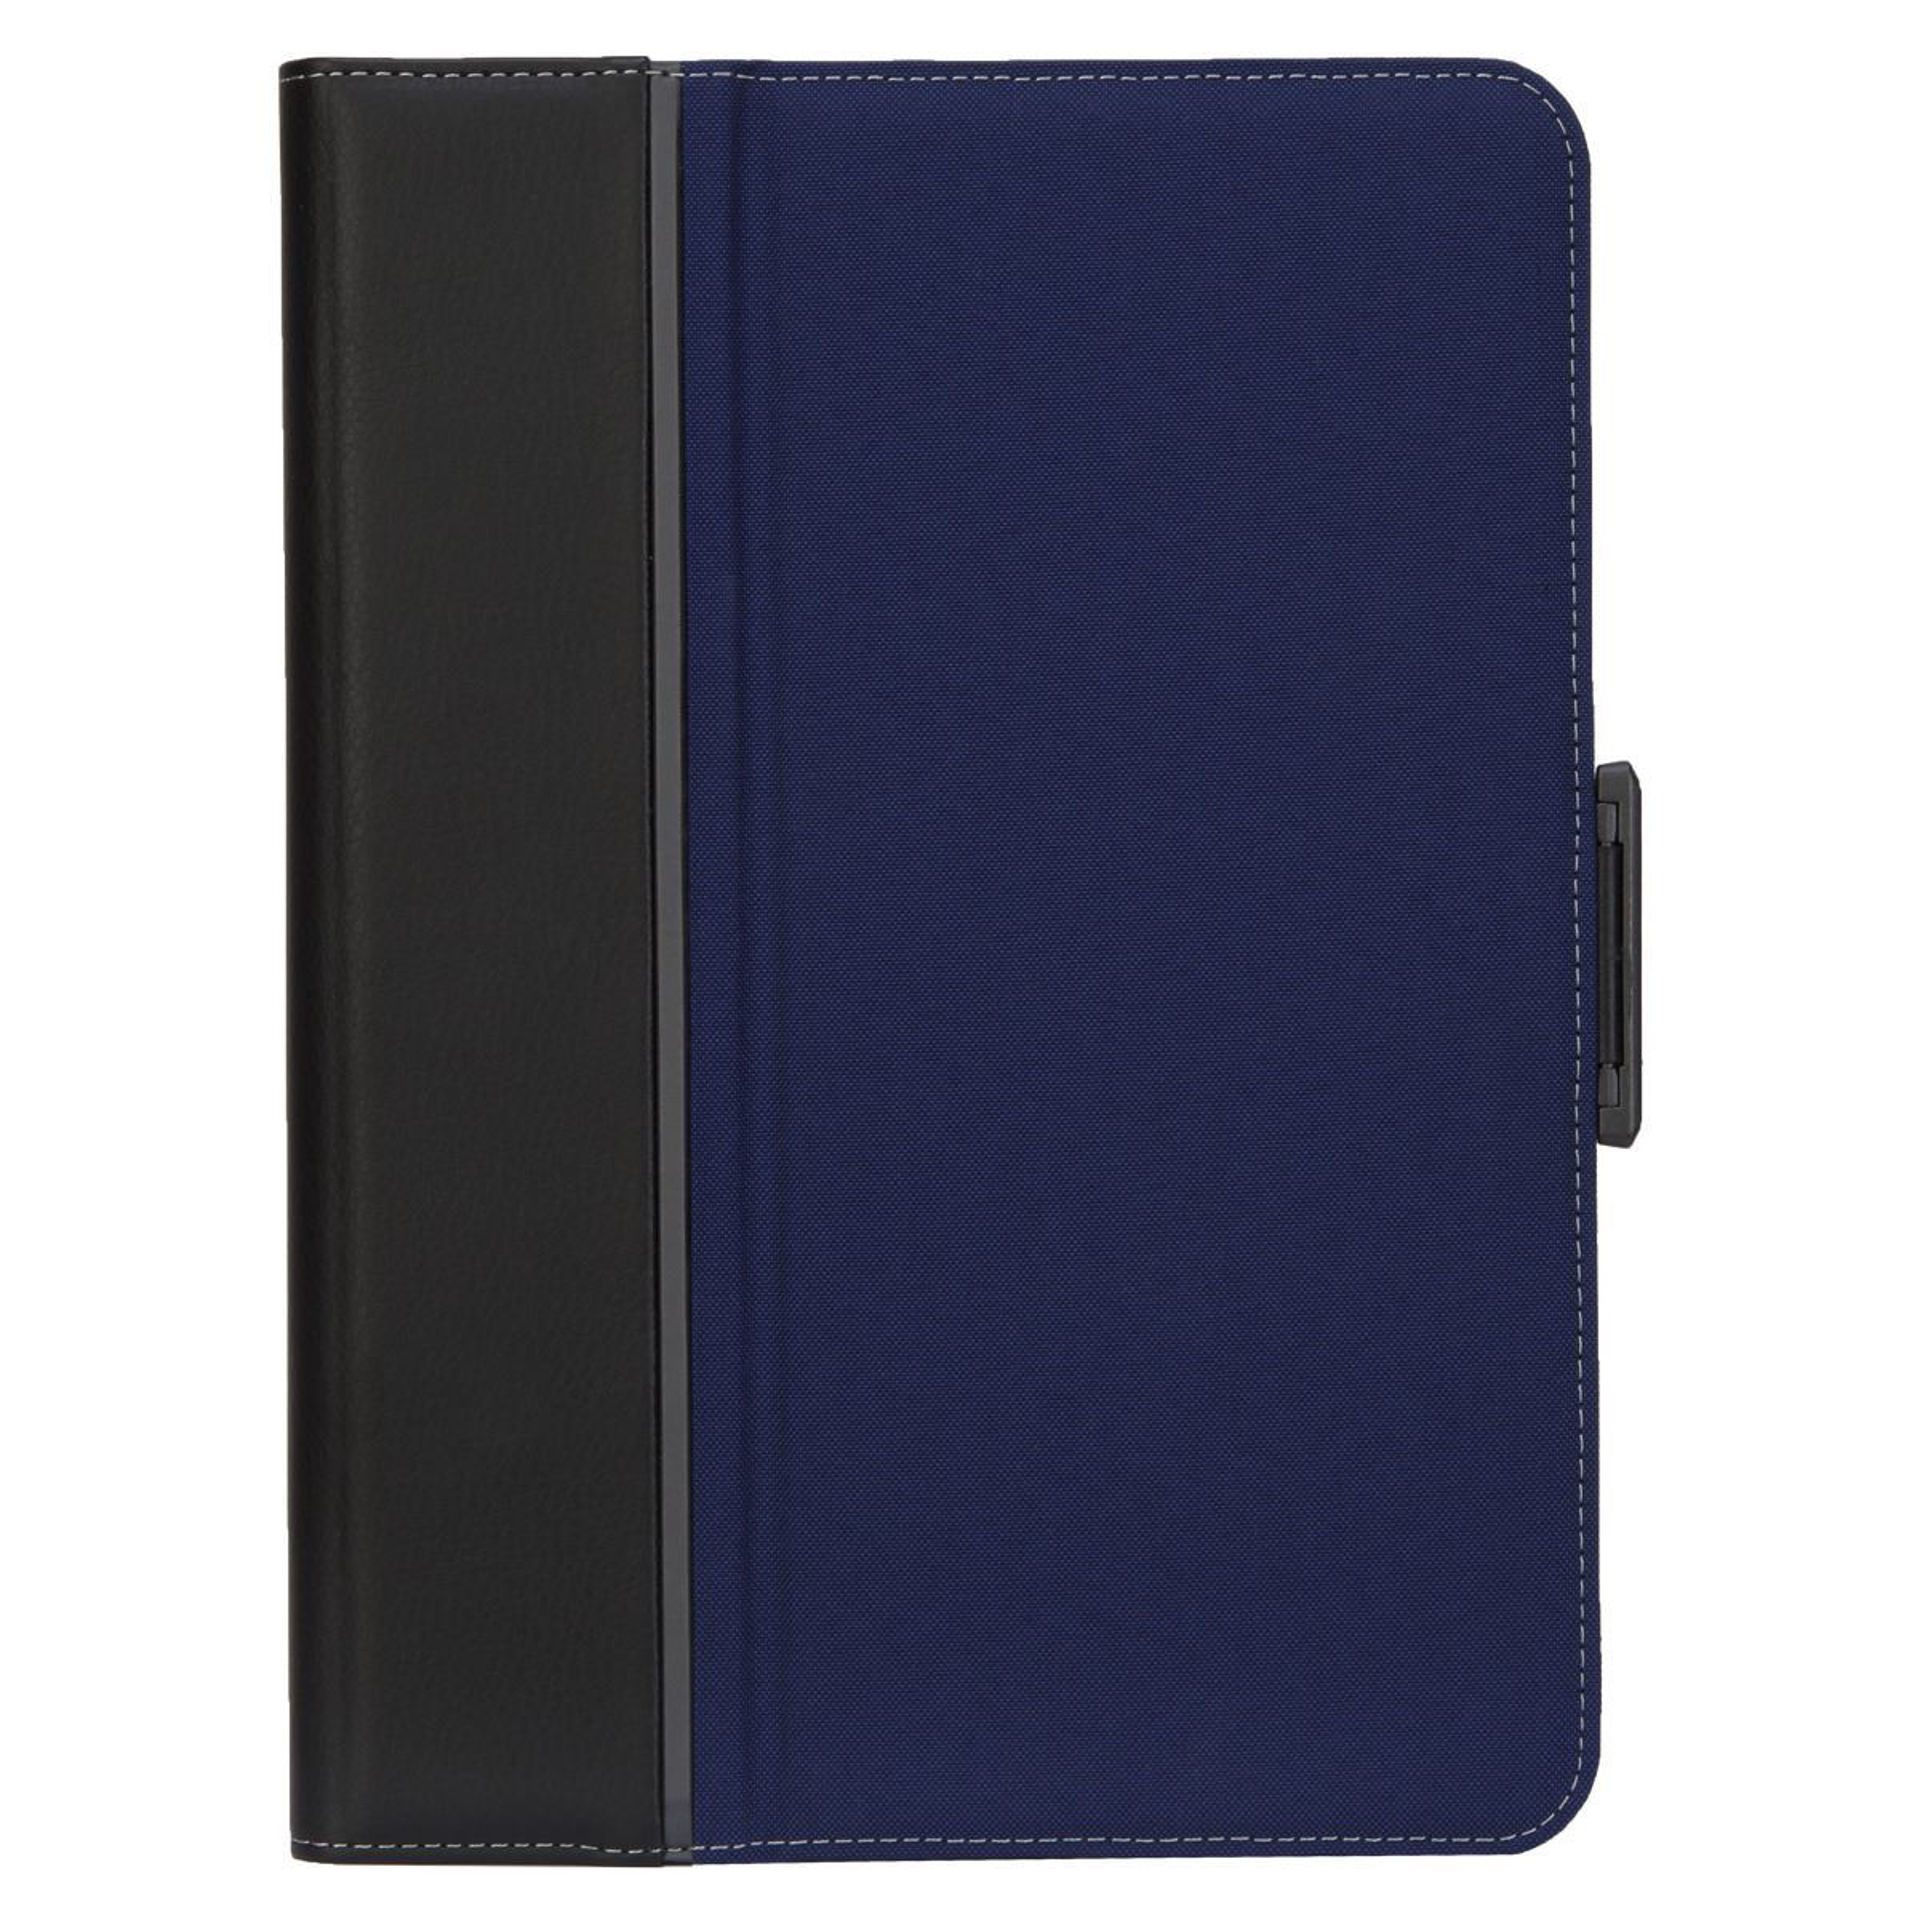 Targus Versavu Signature case for iPad (6th gen. / 5th gen.), iPad Pro (9.7-inch), iPad Air 2, and iPad Air Blue